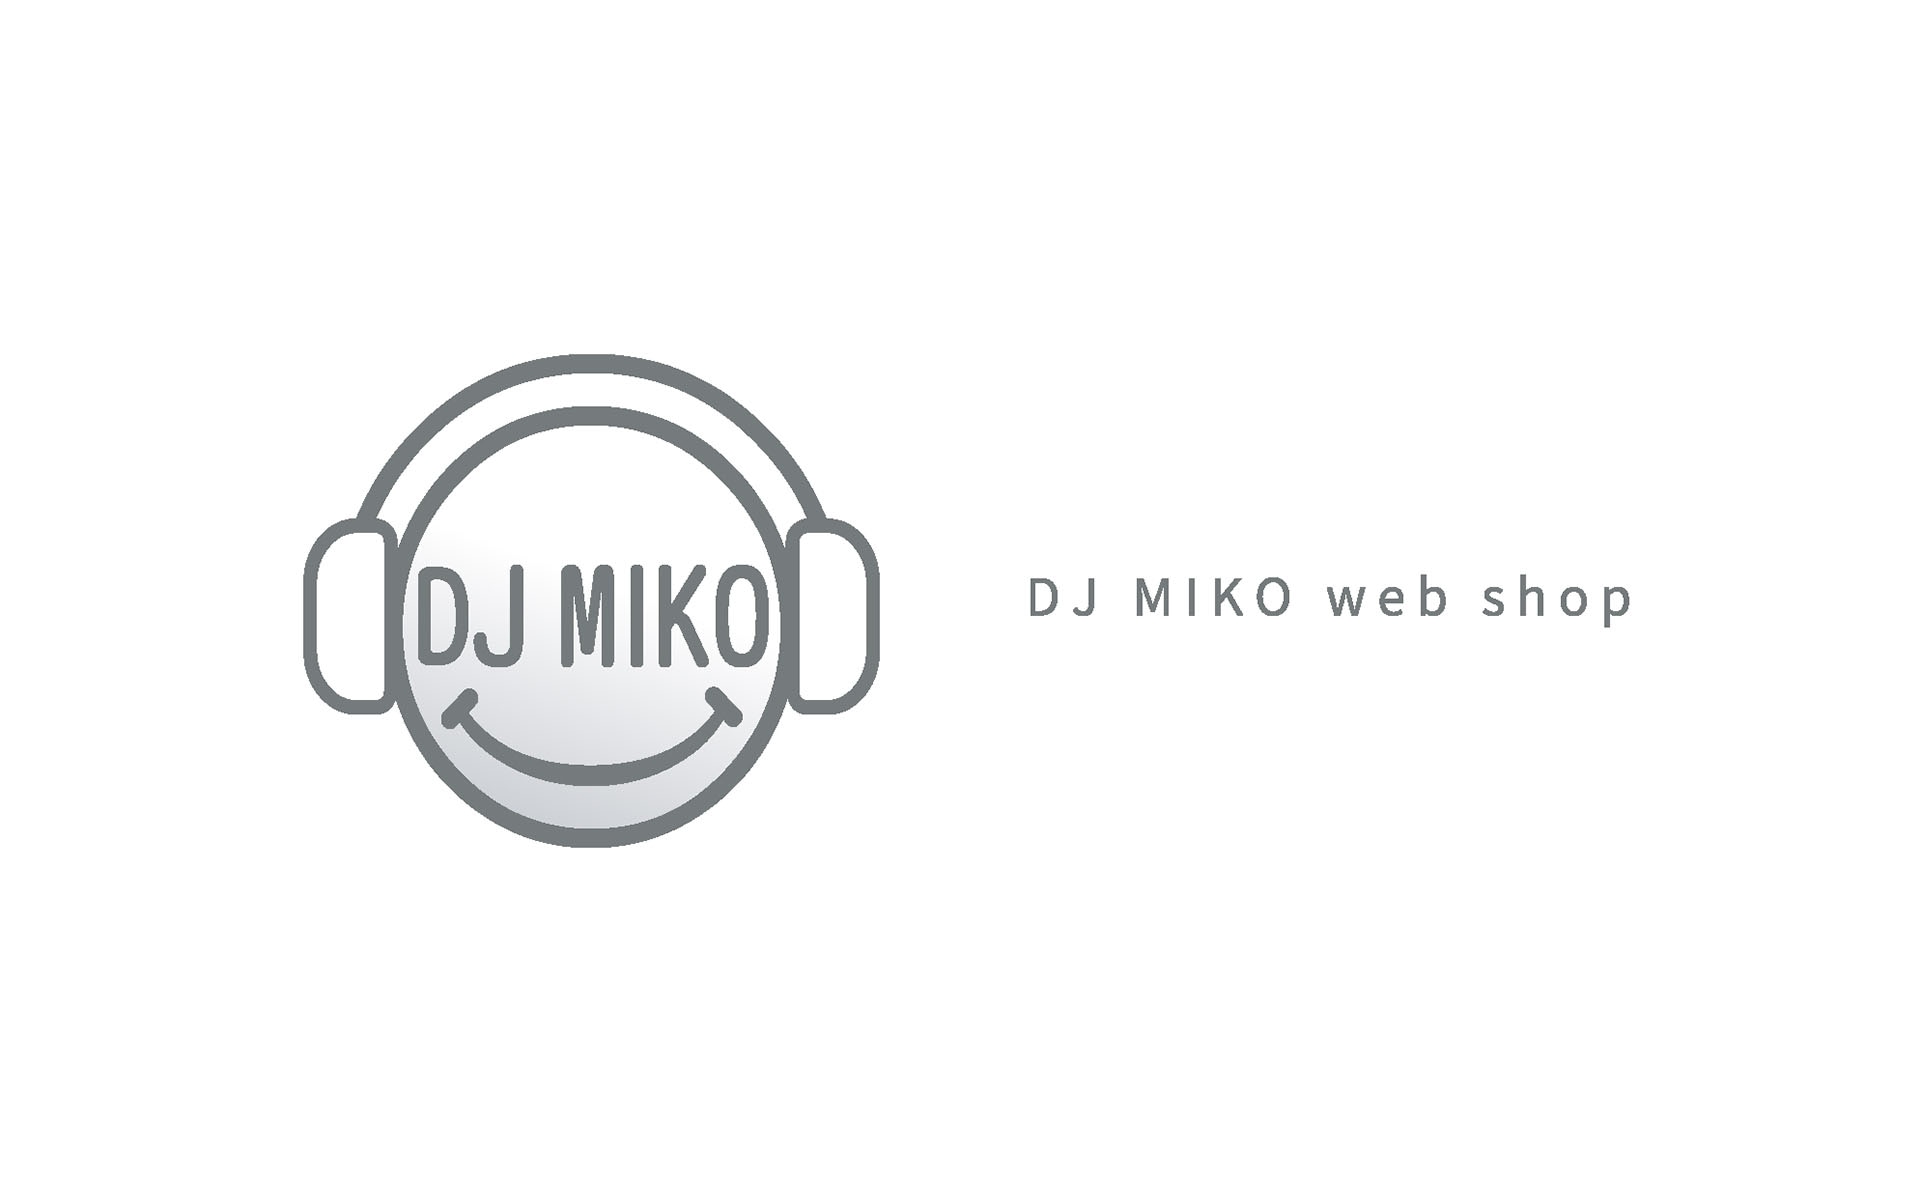 DJ MIKO web shop